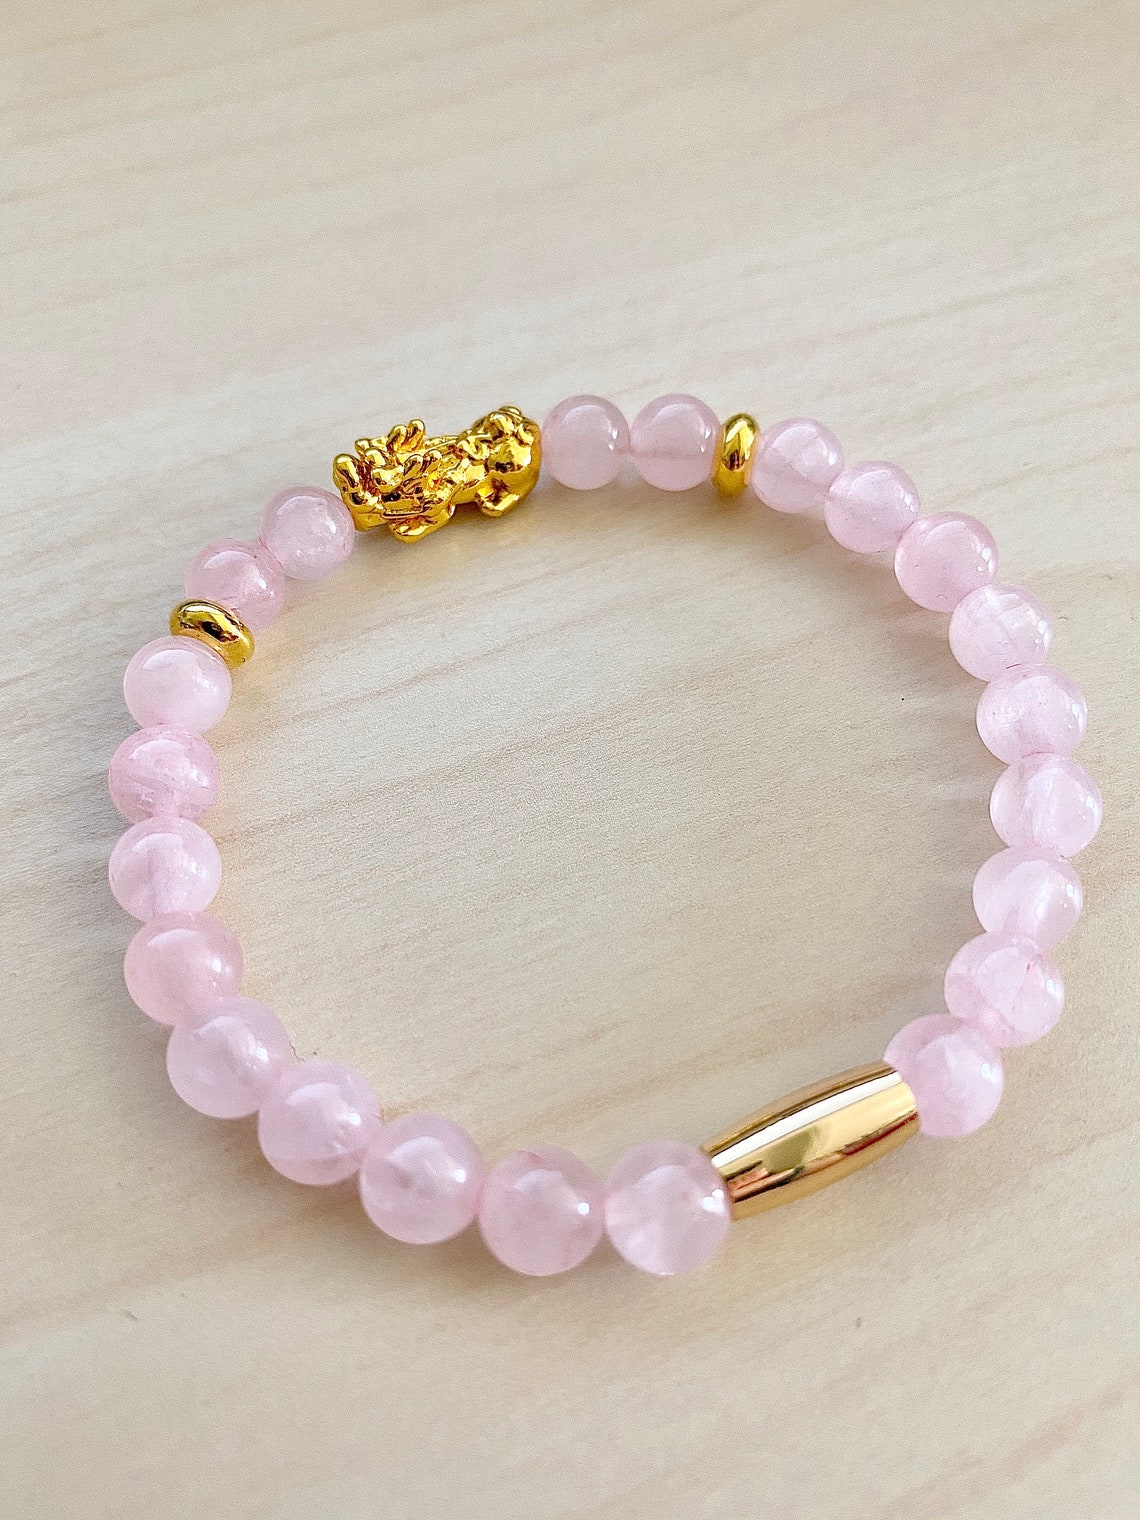 Pixiu bracelet/rose quartz bracelet/lucky charm/rose | Etsy